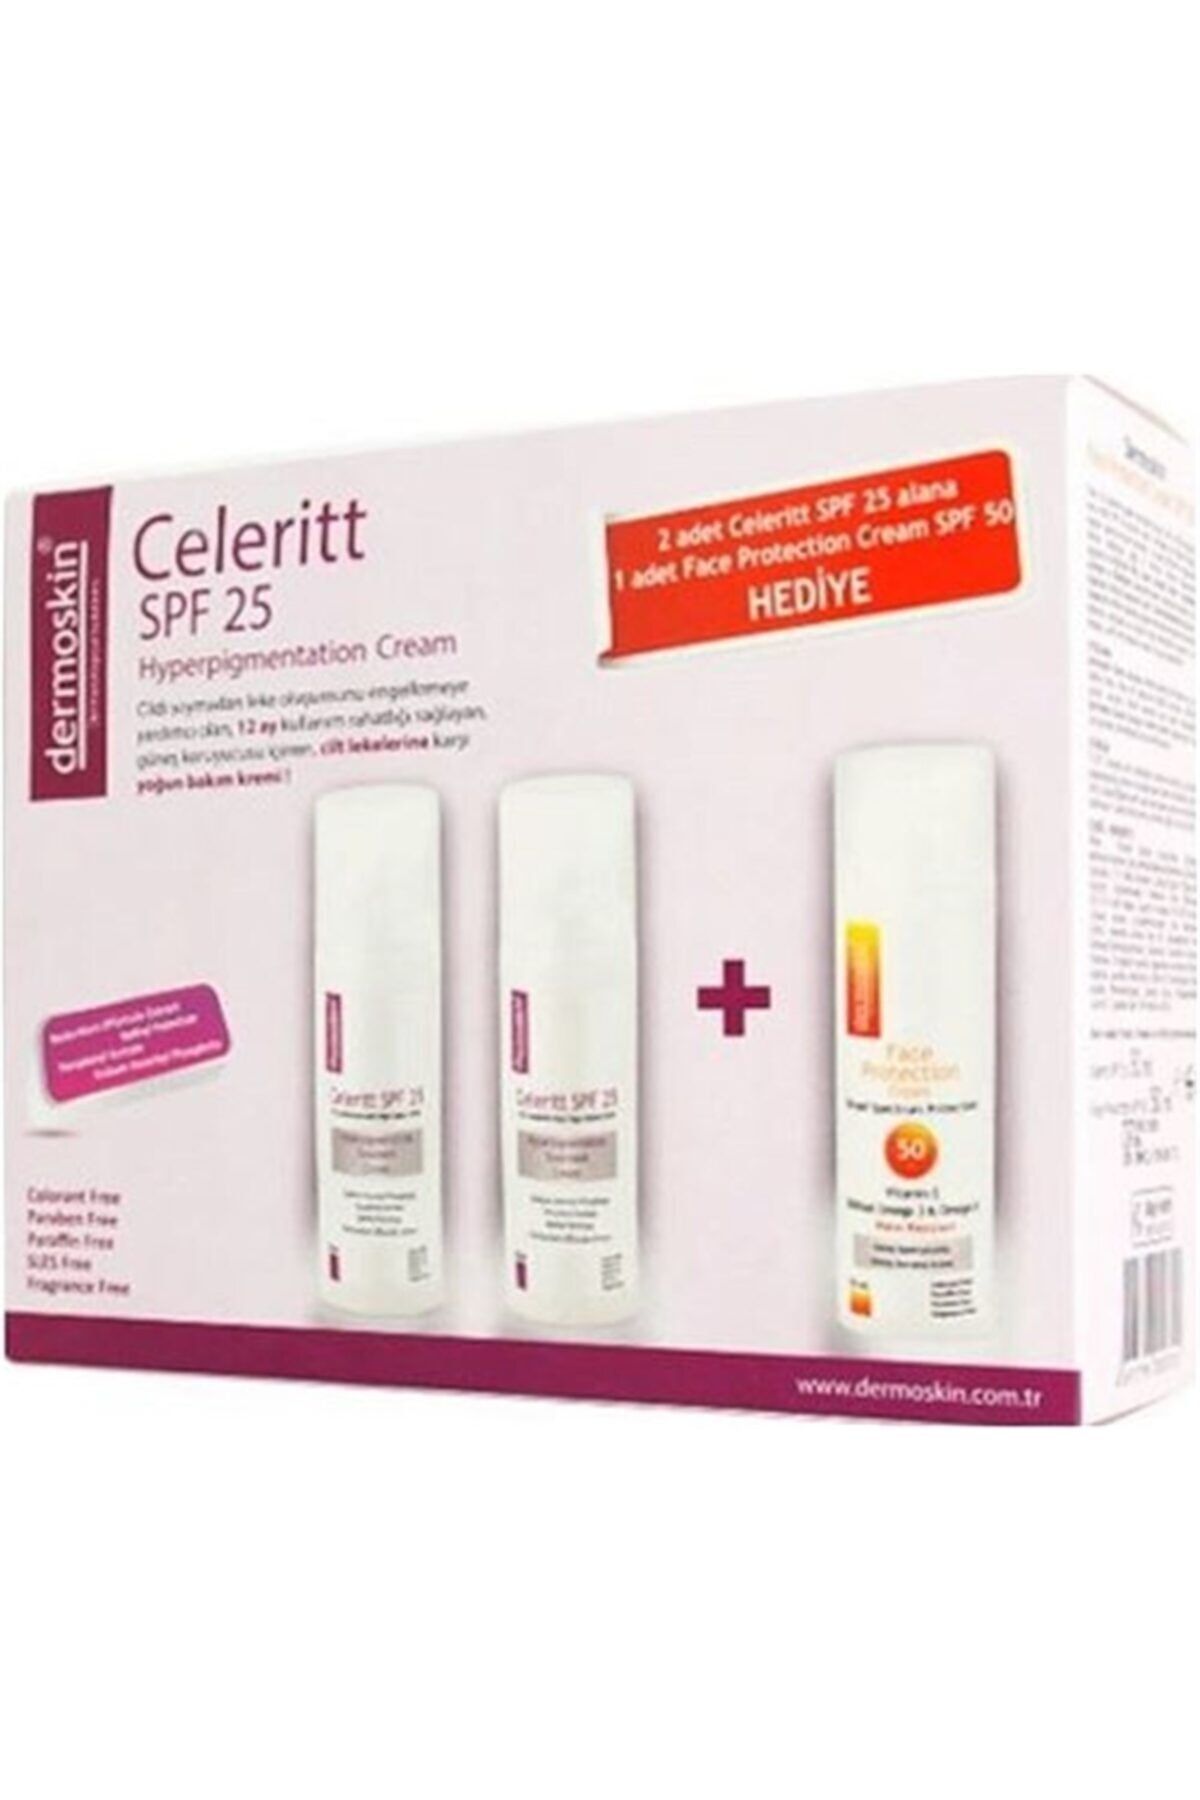 Dermoskin Celeritt Spf25 2 X 30 Ml + Face Protection Spf50 Cream 50 Ml Hediye